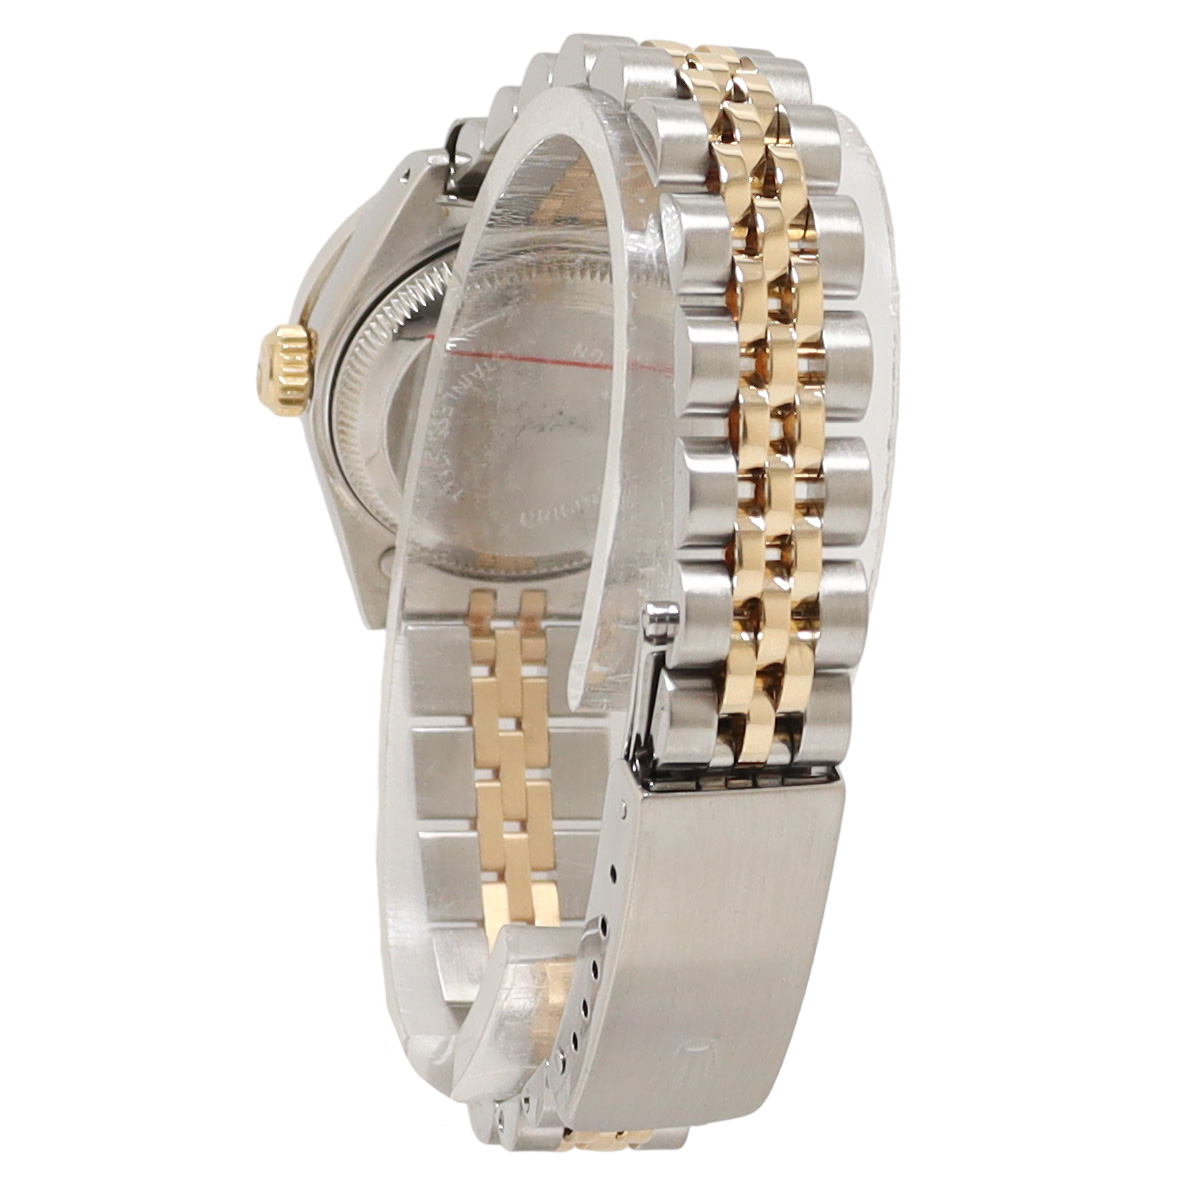 Rolex Datejust Two Tone Yellow Gold & Steel 26mm White MOP Diamond Dial Watch Reference#: 69173 - Happy Jewelers Fine Jewelry Lifetime Warranty